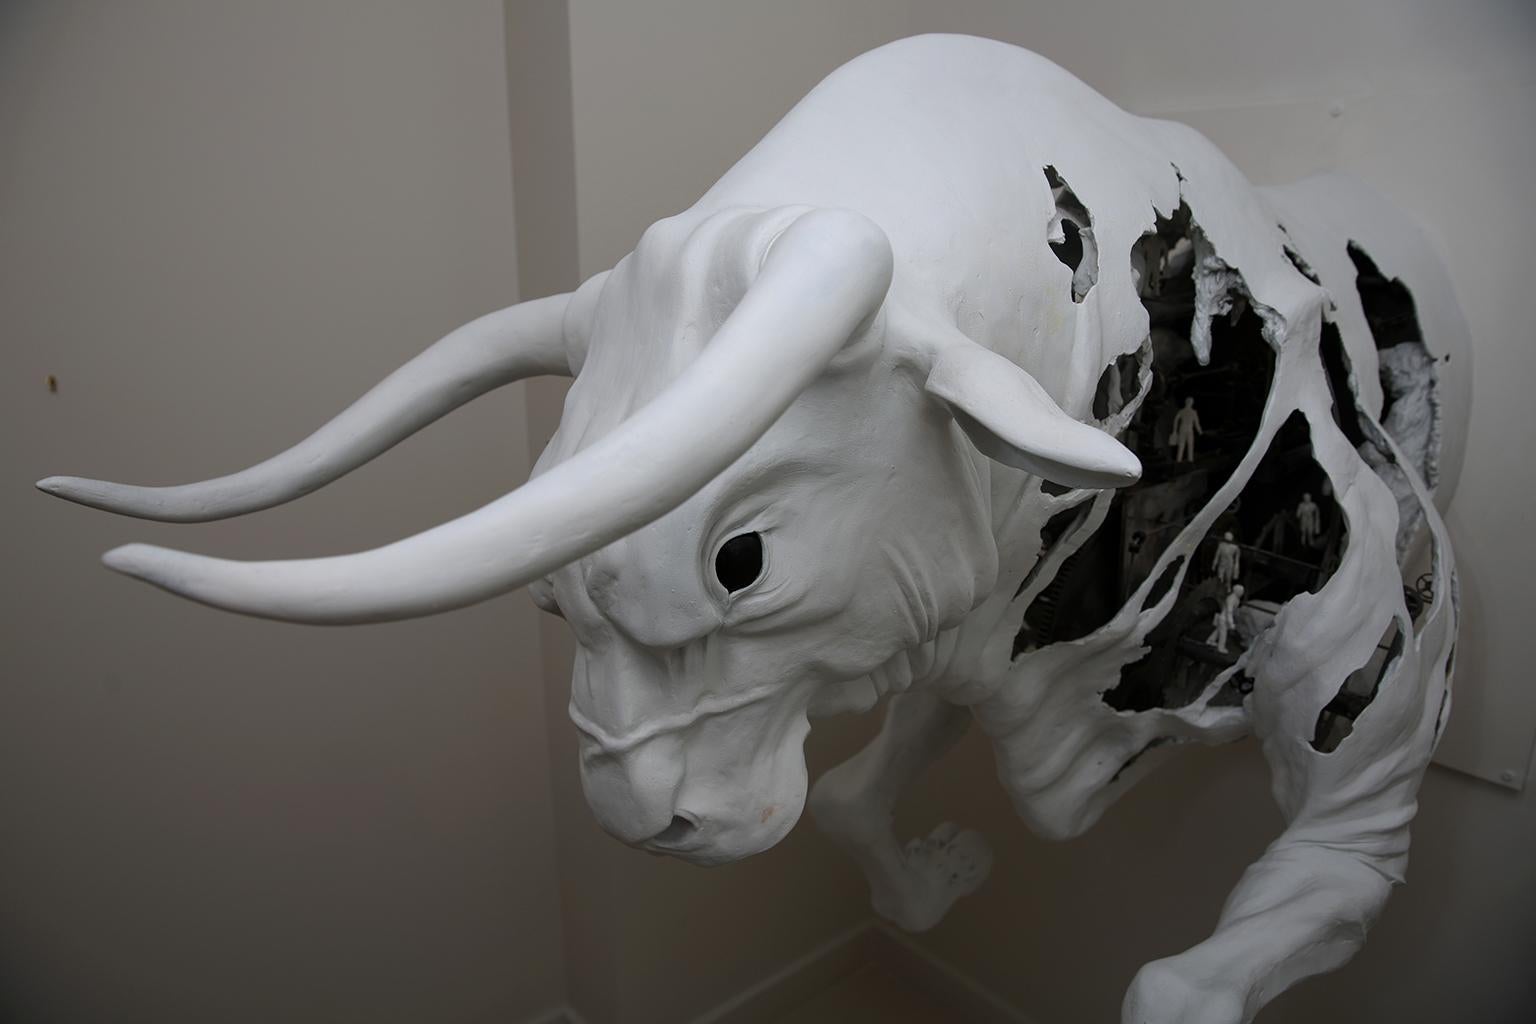 The Bull by Hobbes Vincent. White plaster and steel sculpture. Bull Bear Market 5